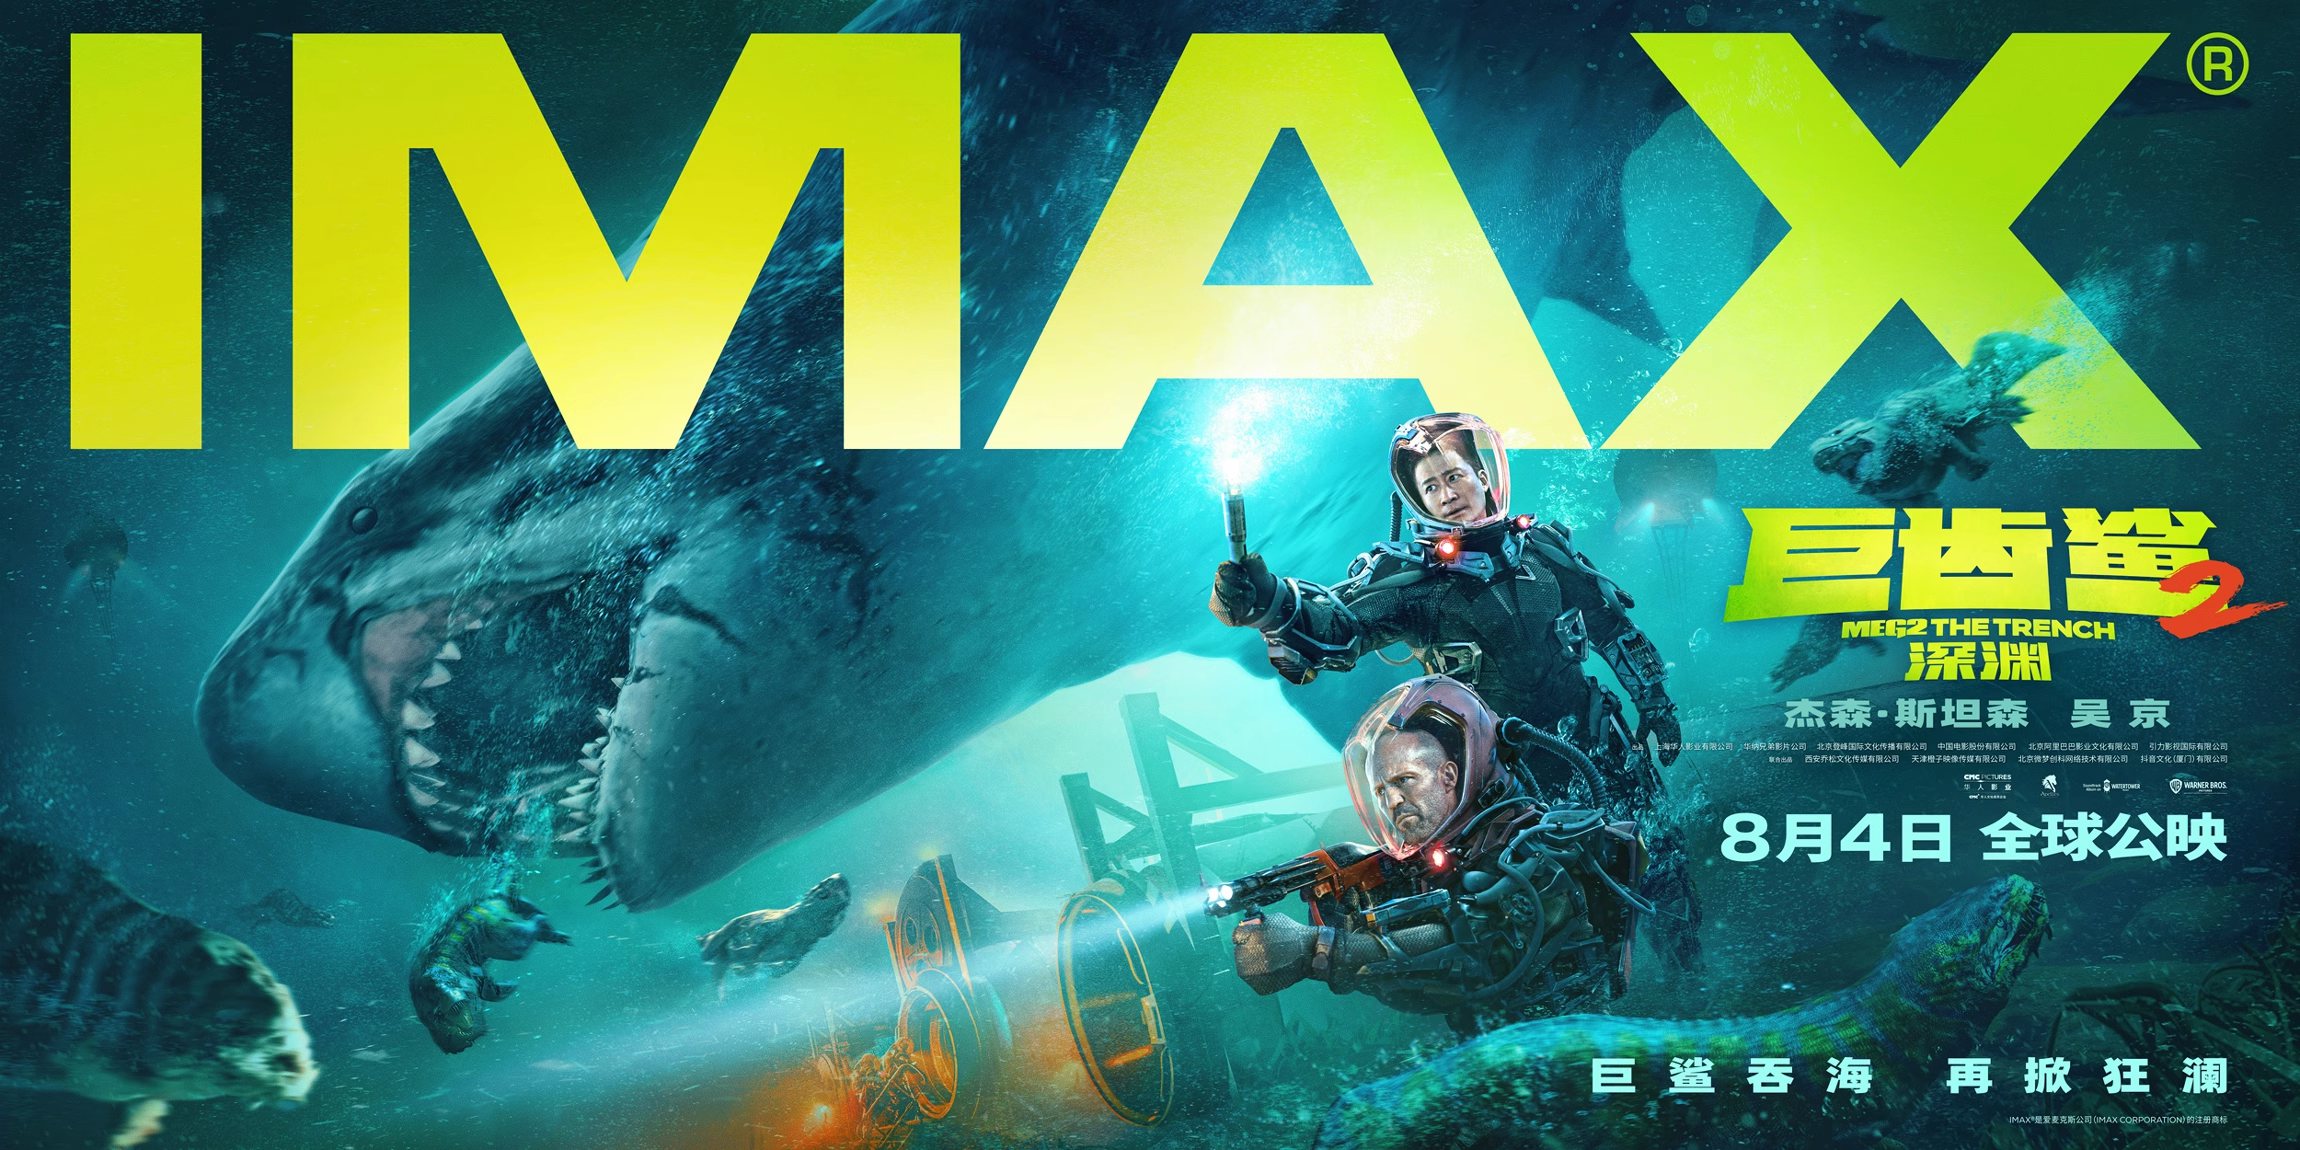 imax发布《巨齿鲨2:深渊》专属海报及预告 两大硬汉激战史前巨兽